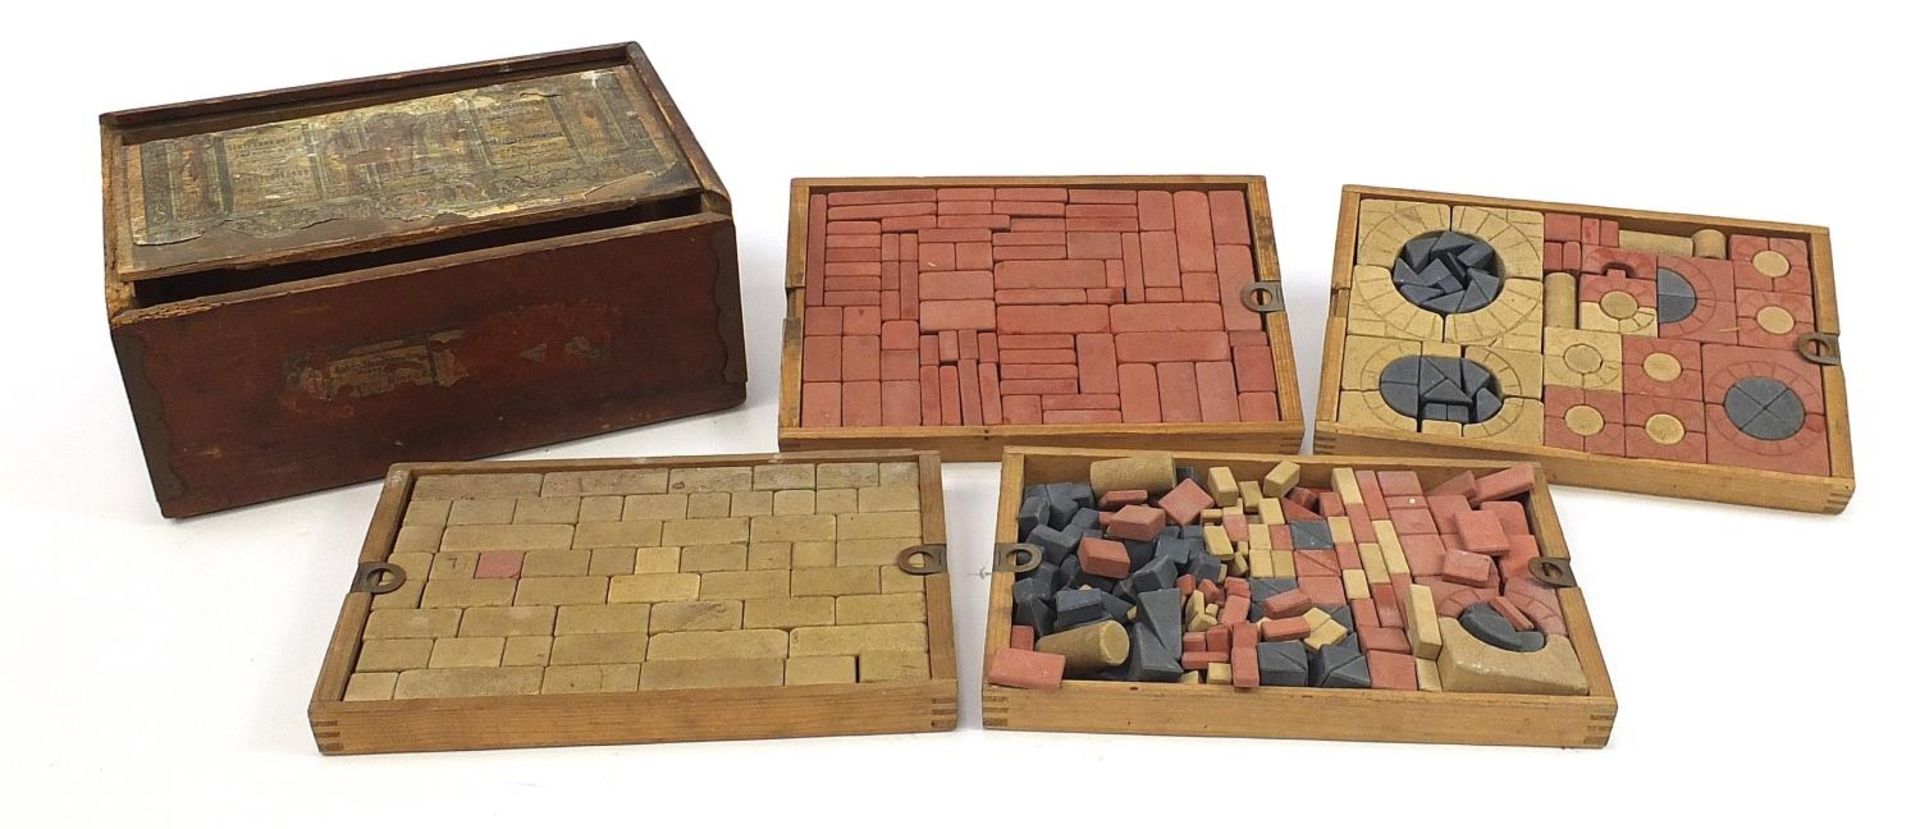 Set of German Richter stone architectural blocks with wooden case, the case 16.5cm H x 36cm W x 25cm